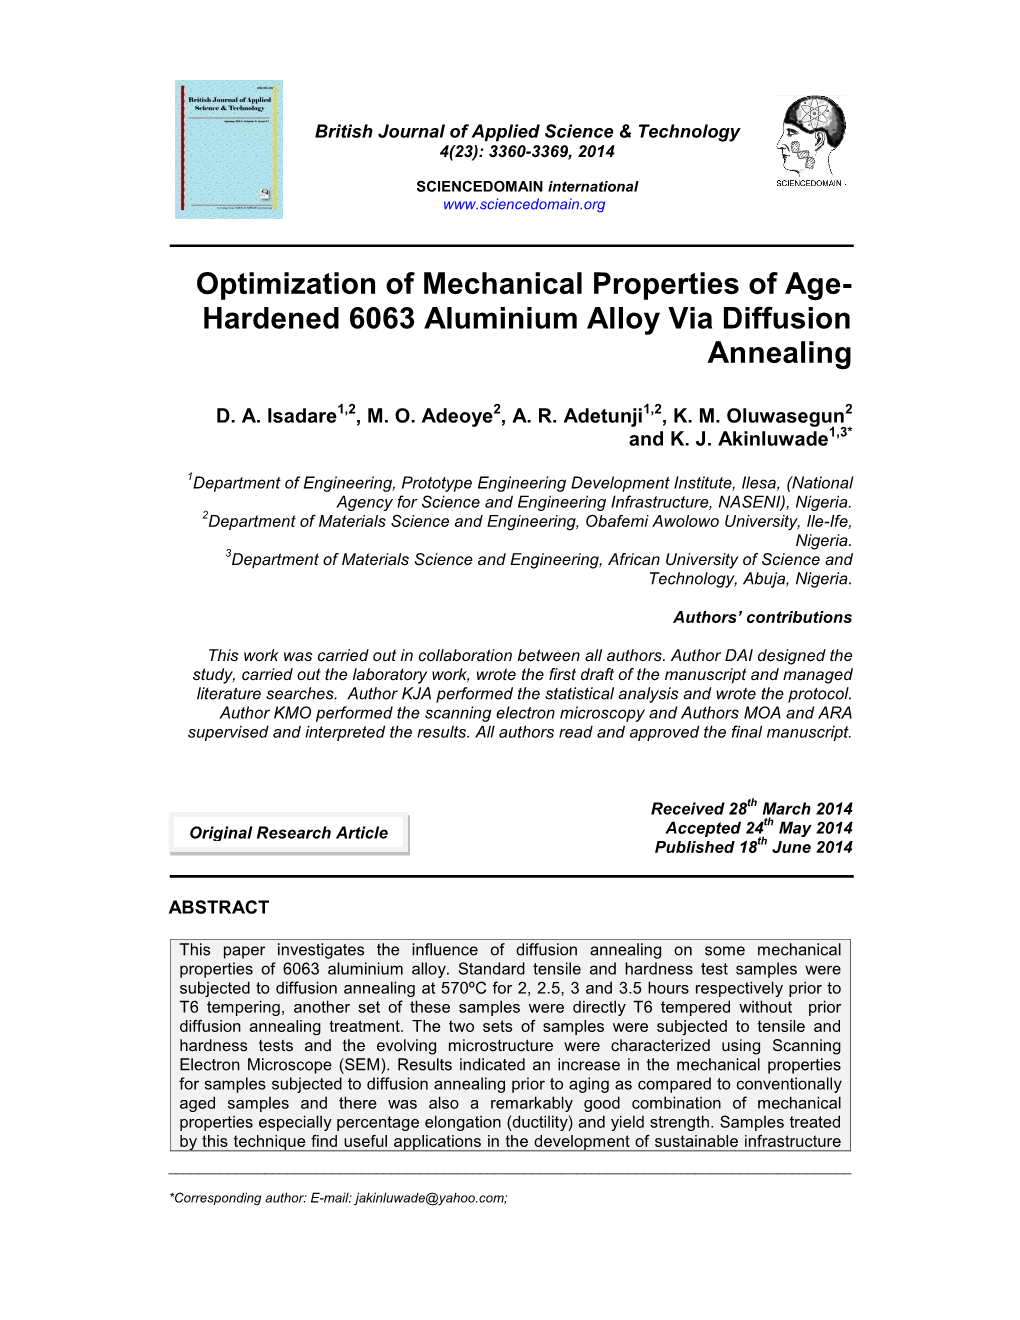 Optimization of Mechanical Properties of Age- Hardened 6063 Aluminium Alloy Via Diffusion Annealing